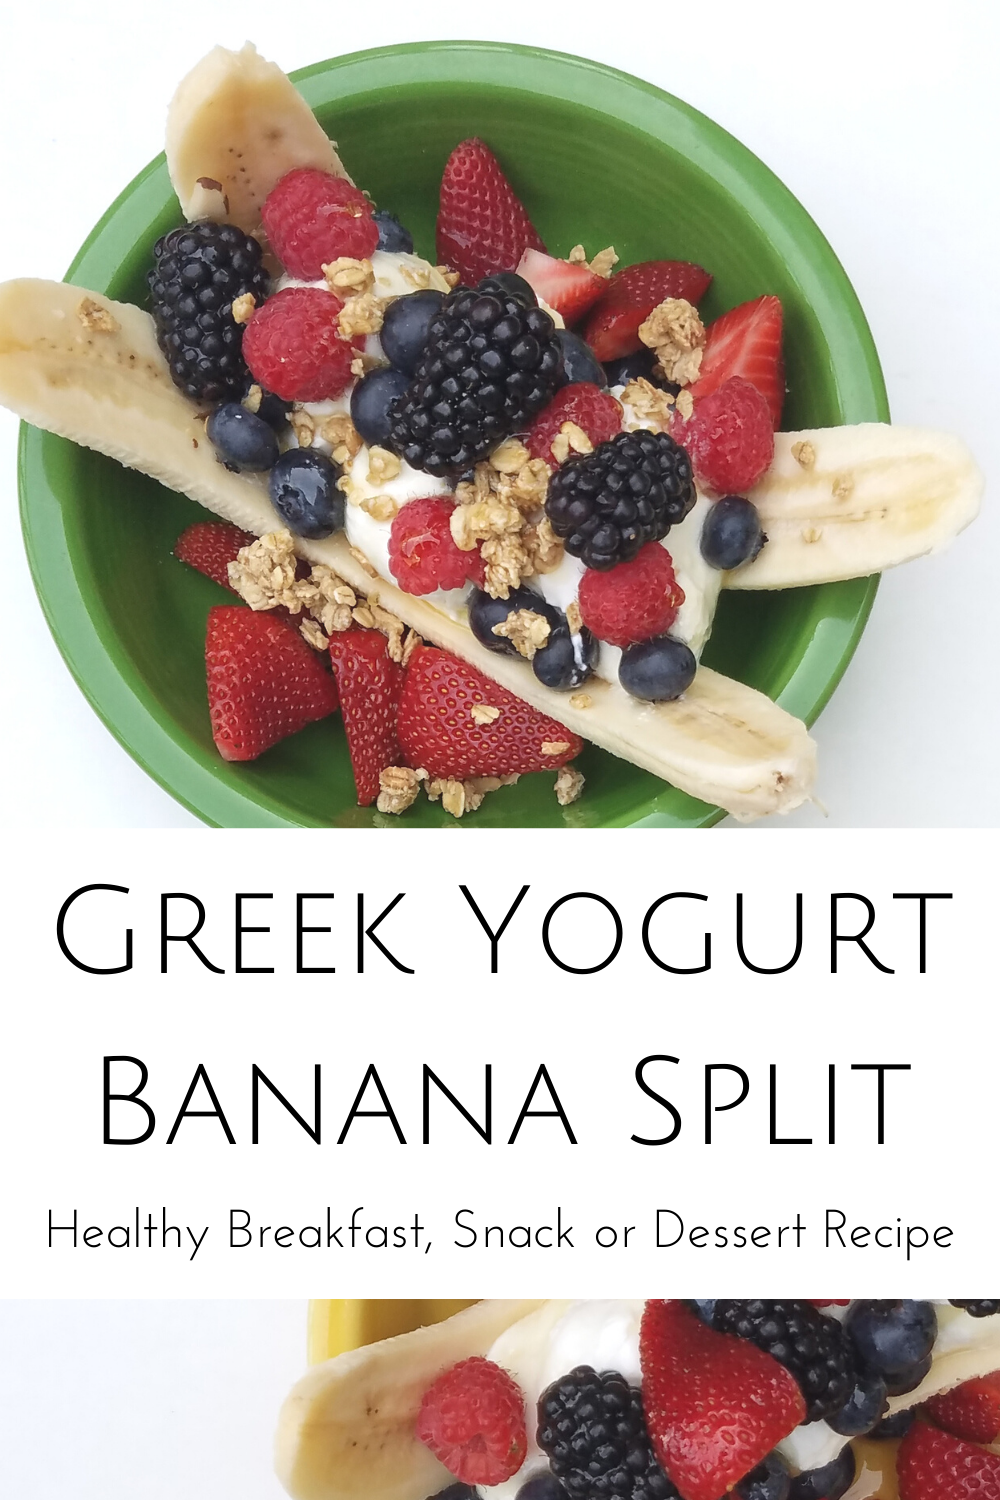 https://images.squarespace-cdn.com/content/v1/510db93de4b037c811a423e4/1592282411813-RFN9AZA278Z46PJ2QSZ4/Healthy+Banana+Split+with+Greek+Yogurt